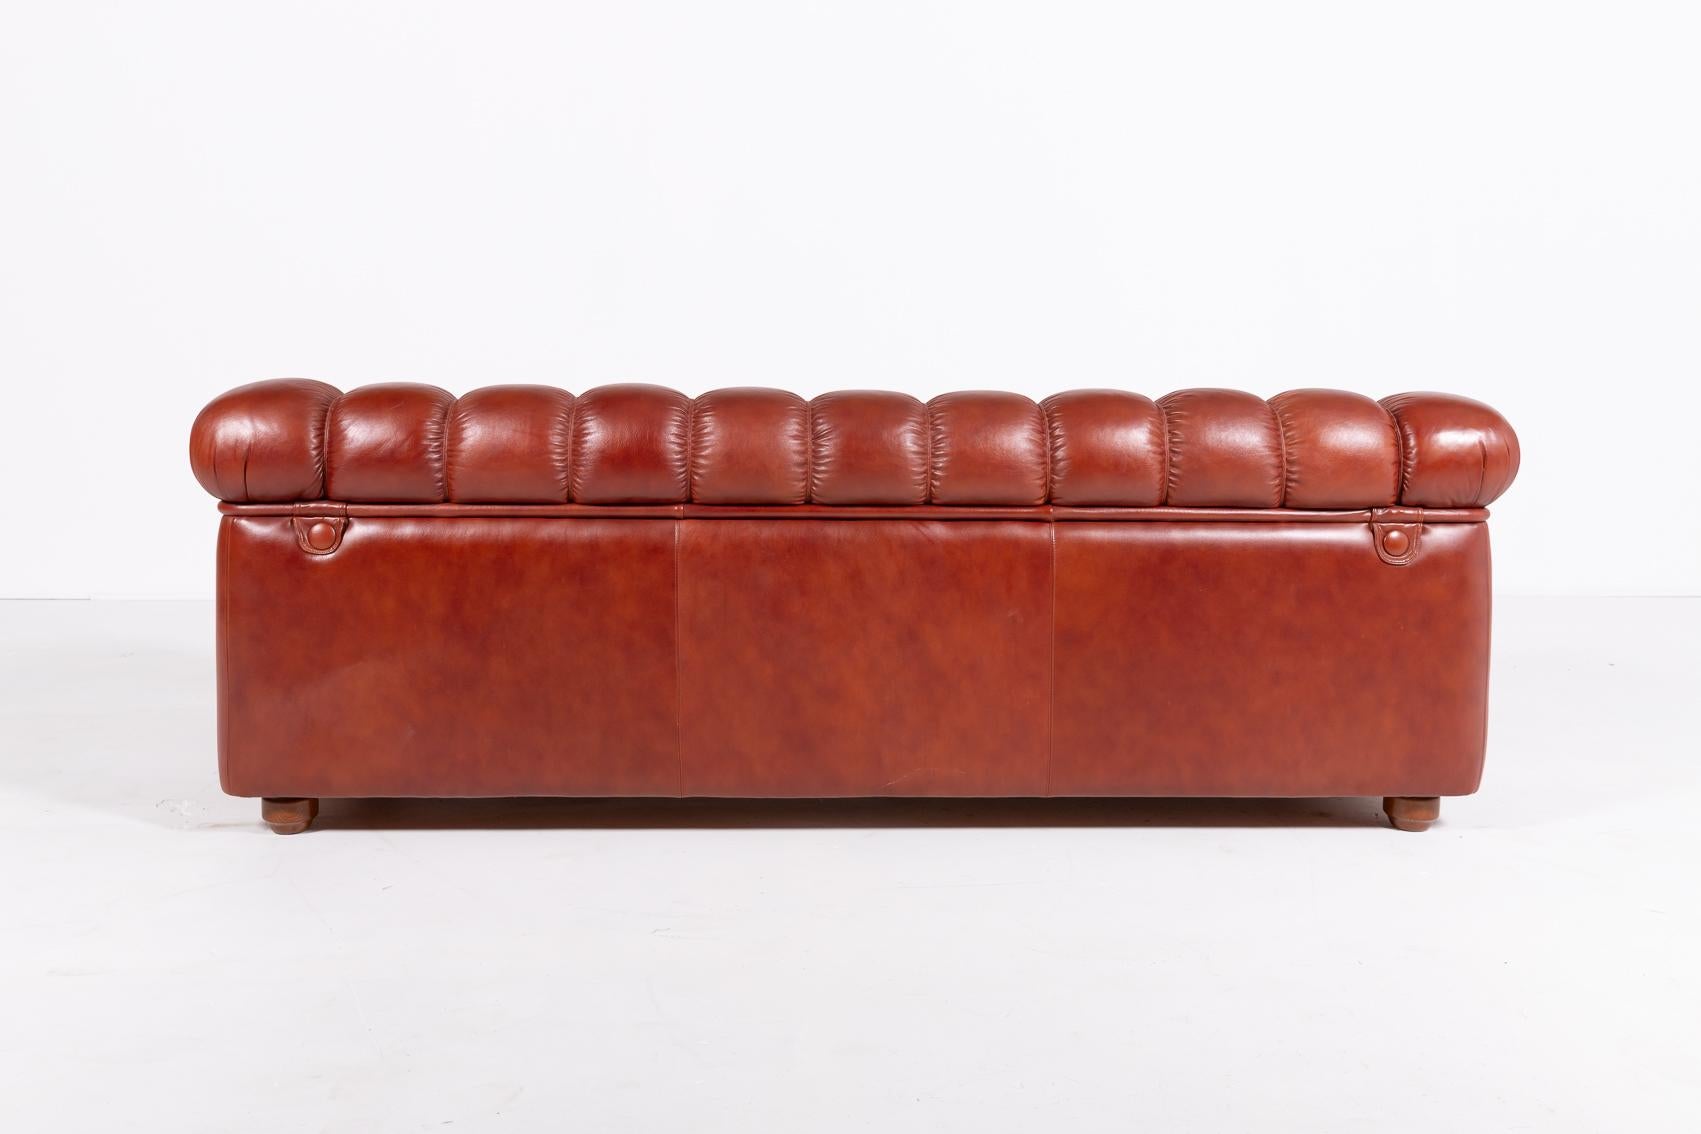 Sculptural Italian Modern three seat cognac leather sofa, 1970’s For Sale 2